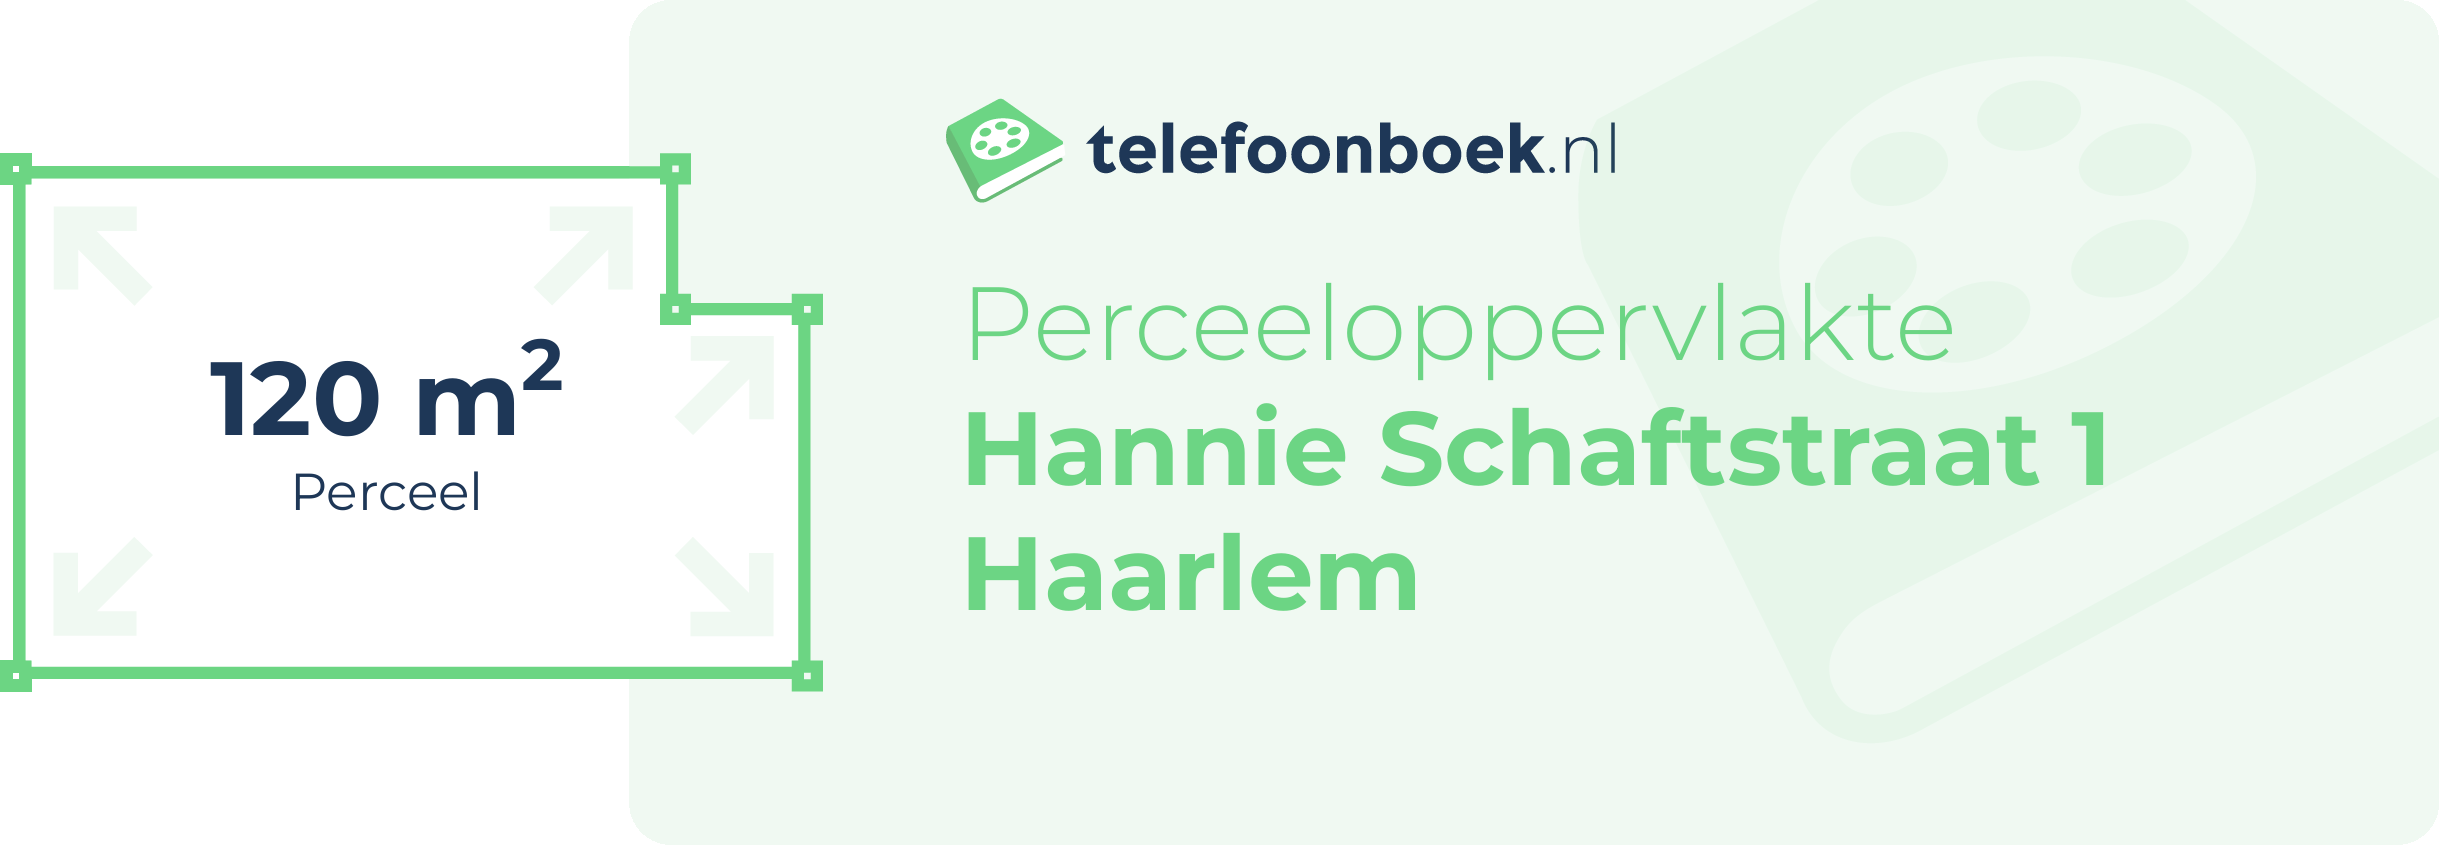 Perceeloppervlakte Hannie Schaftstraat 1 Haarlem